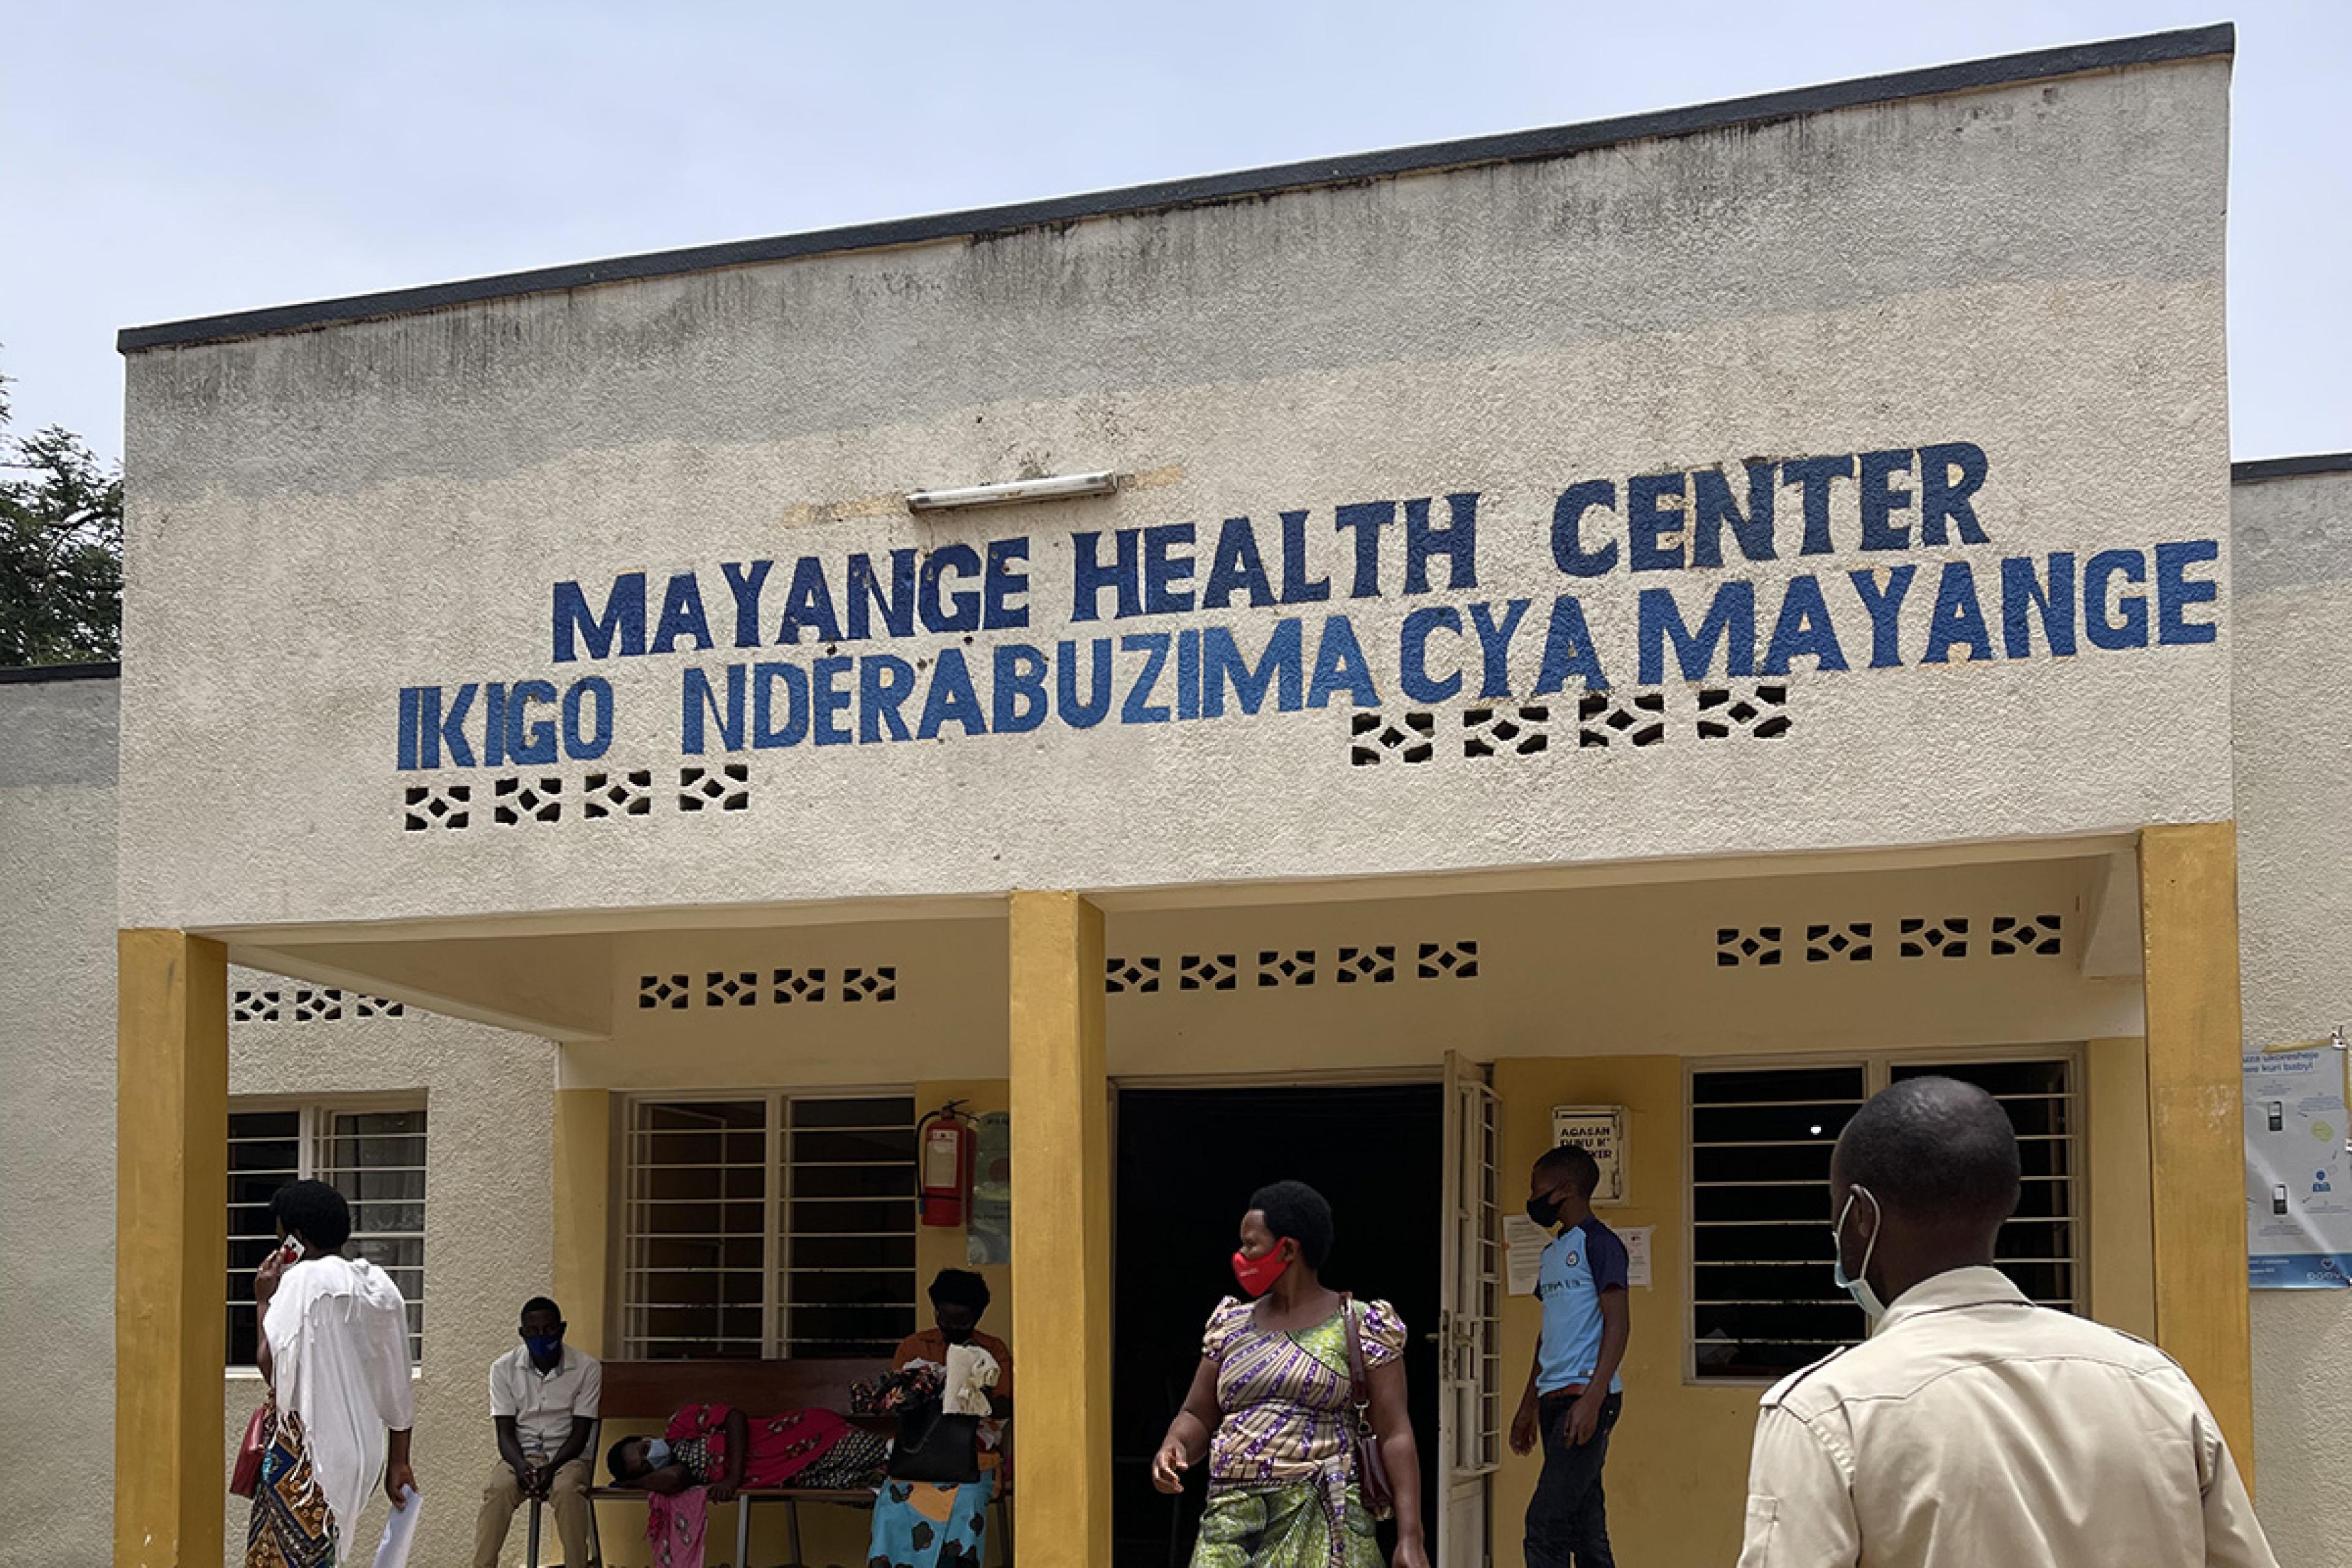 exterior of the Myange Health Center in Rwanda